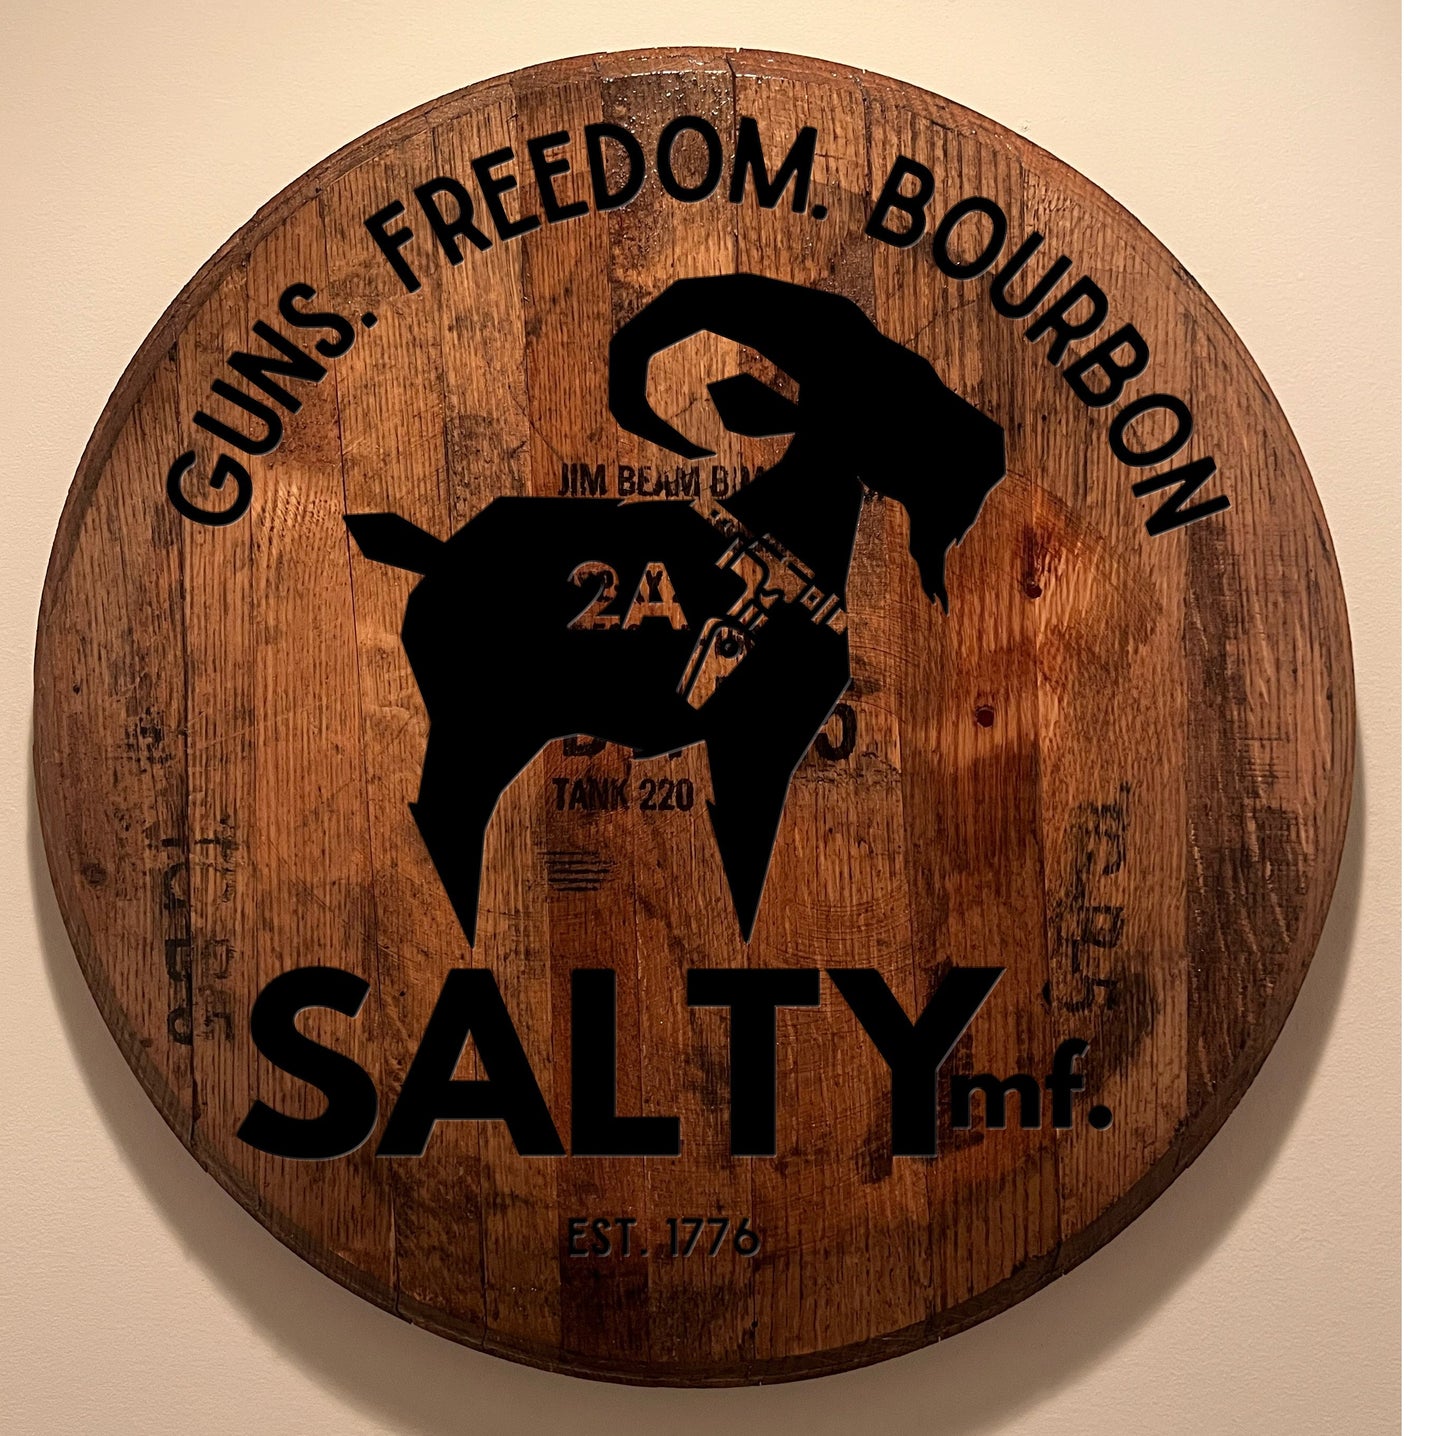 The SALTYMF Authentic 2A Guns Freedom and Bourbon Barrel Head